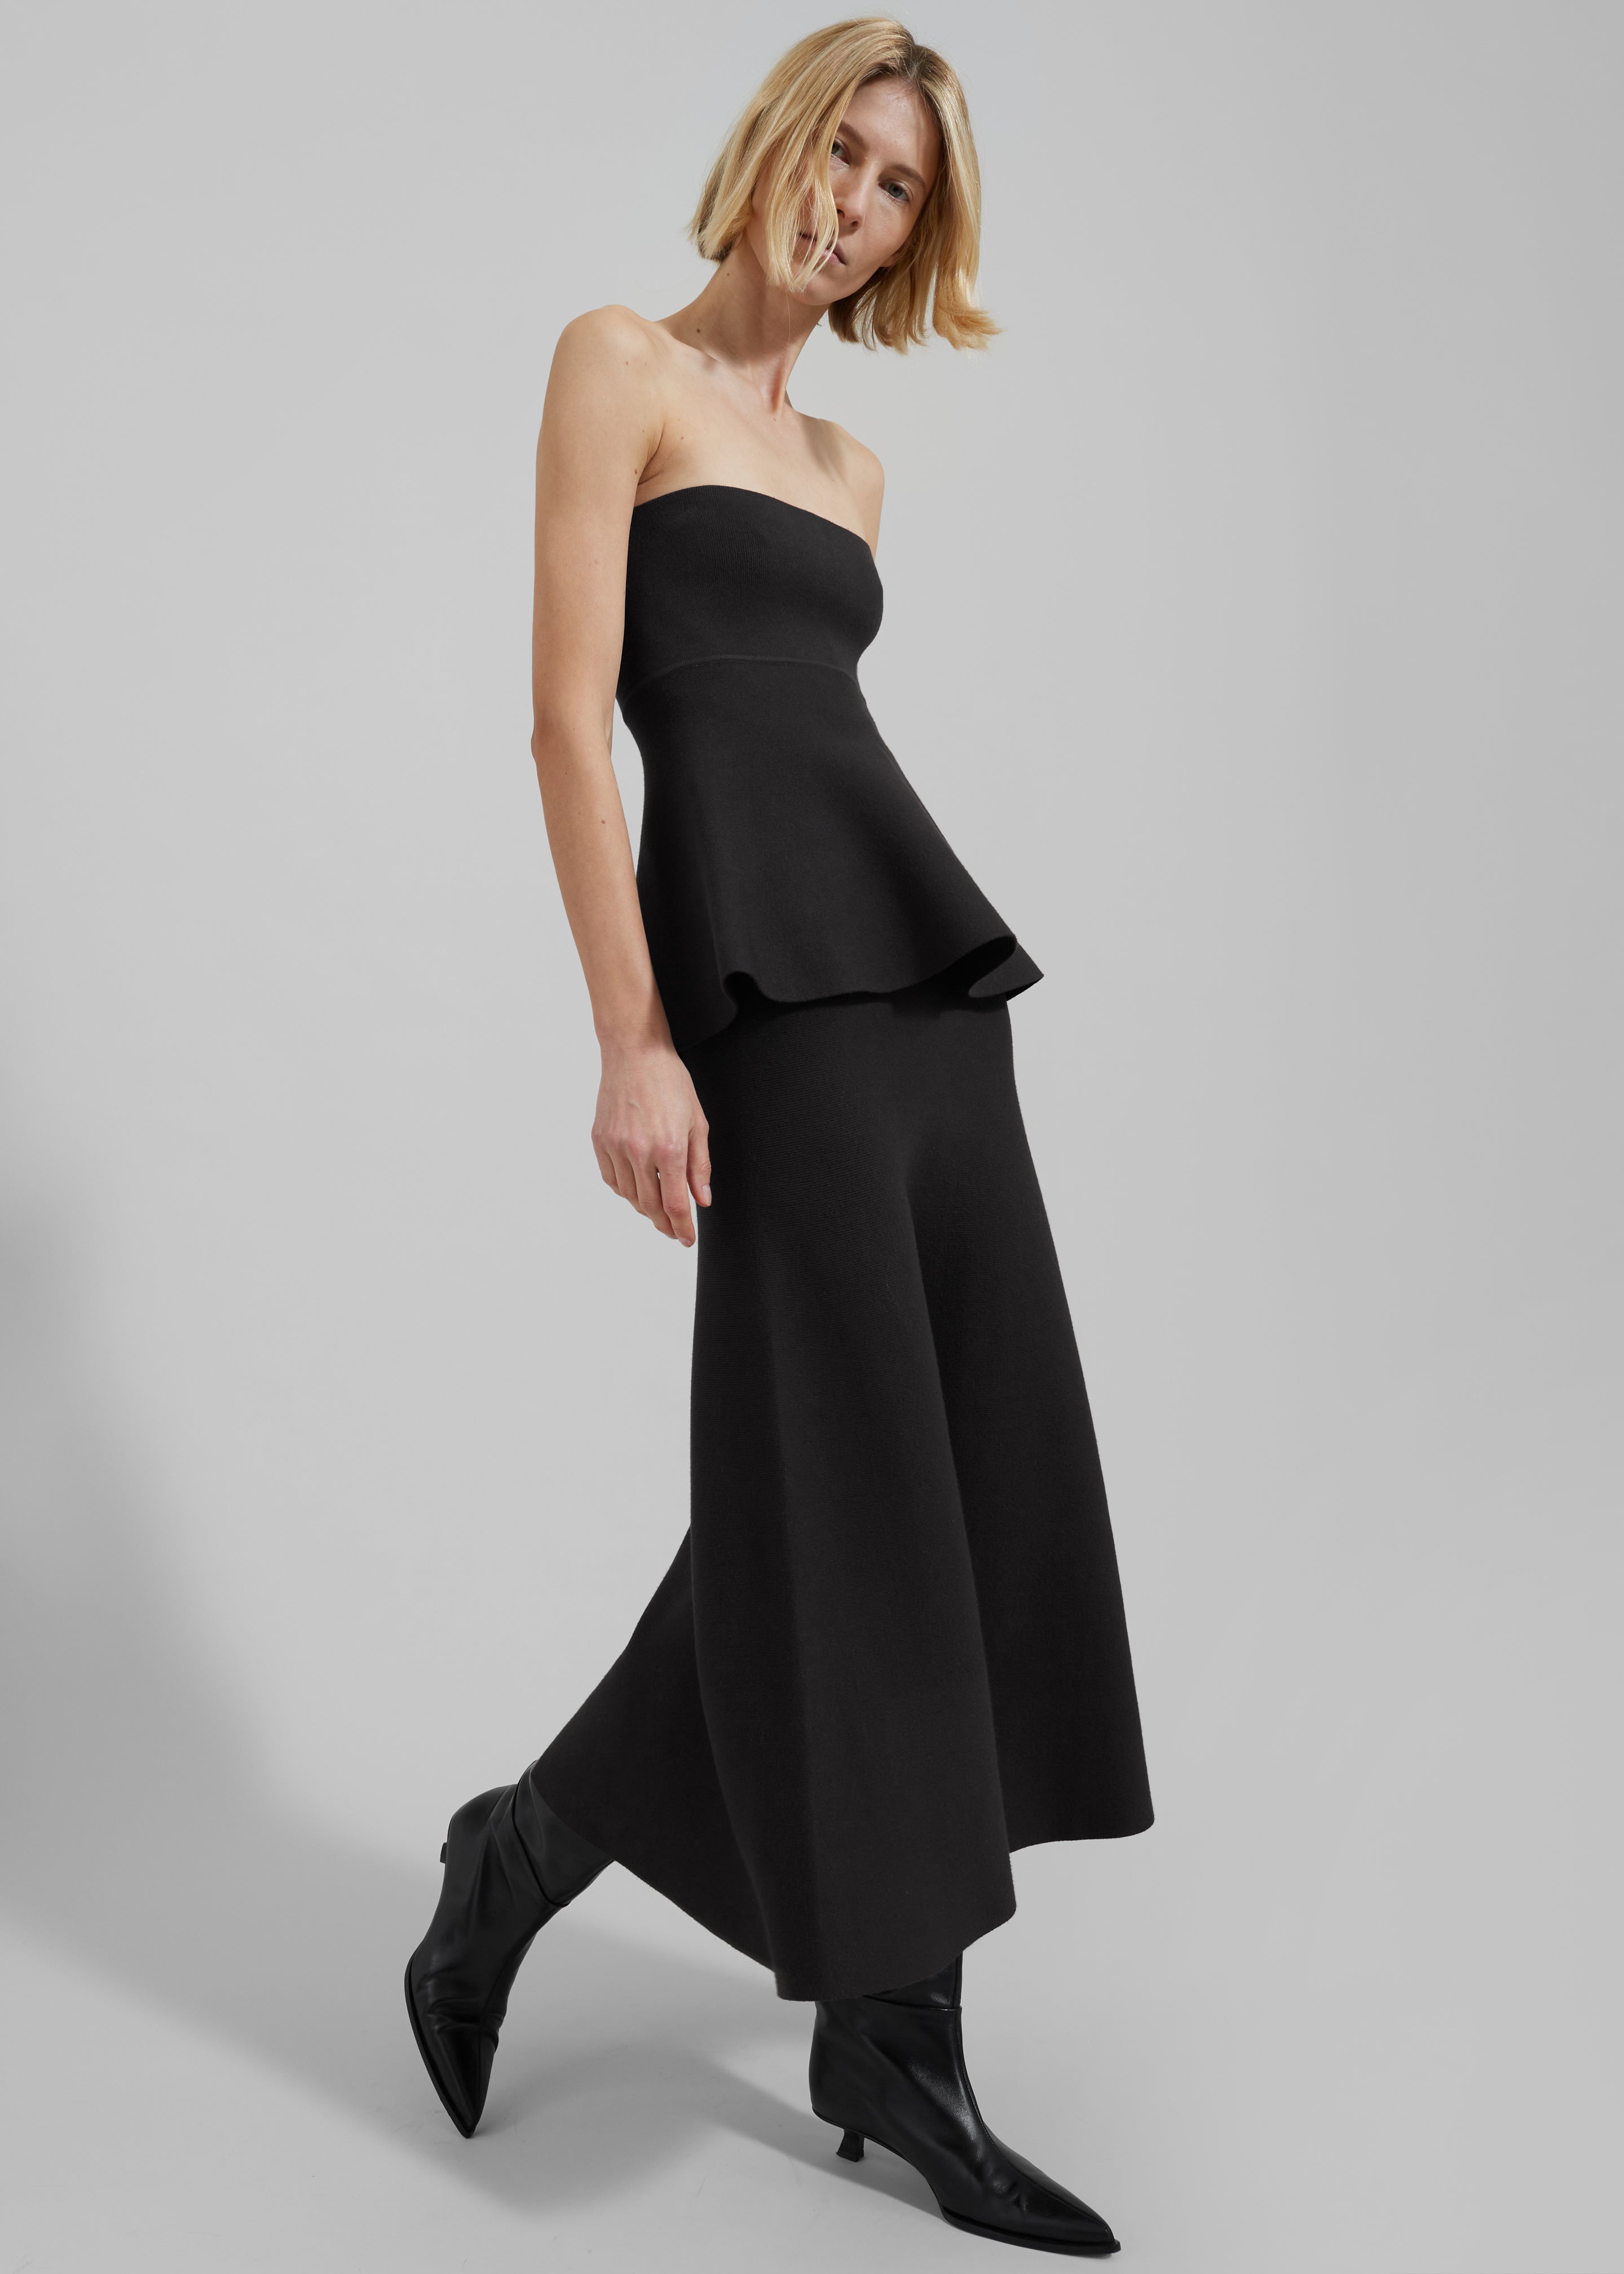 Gabrielle Knit Midi Skirt - Black - 7